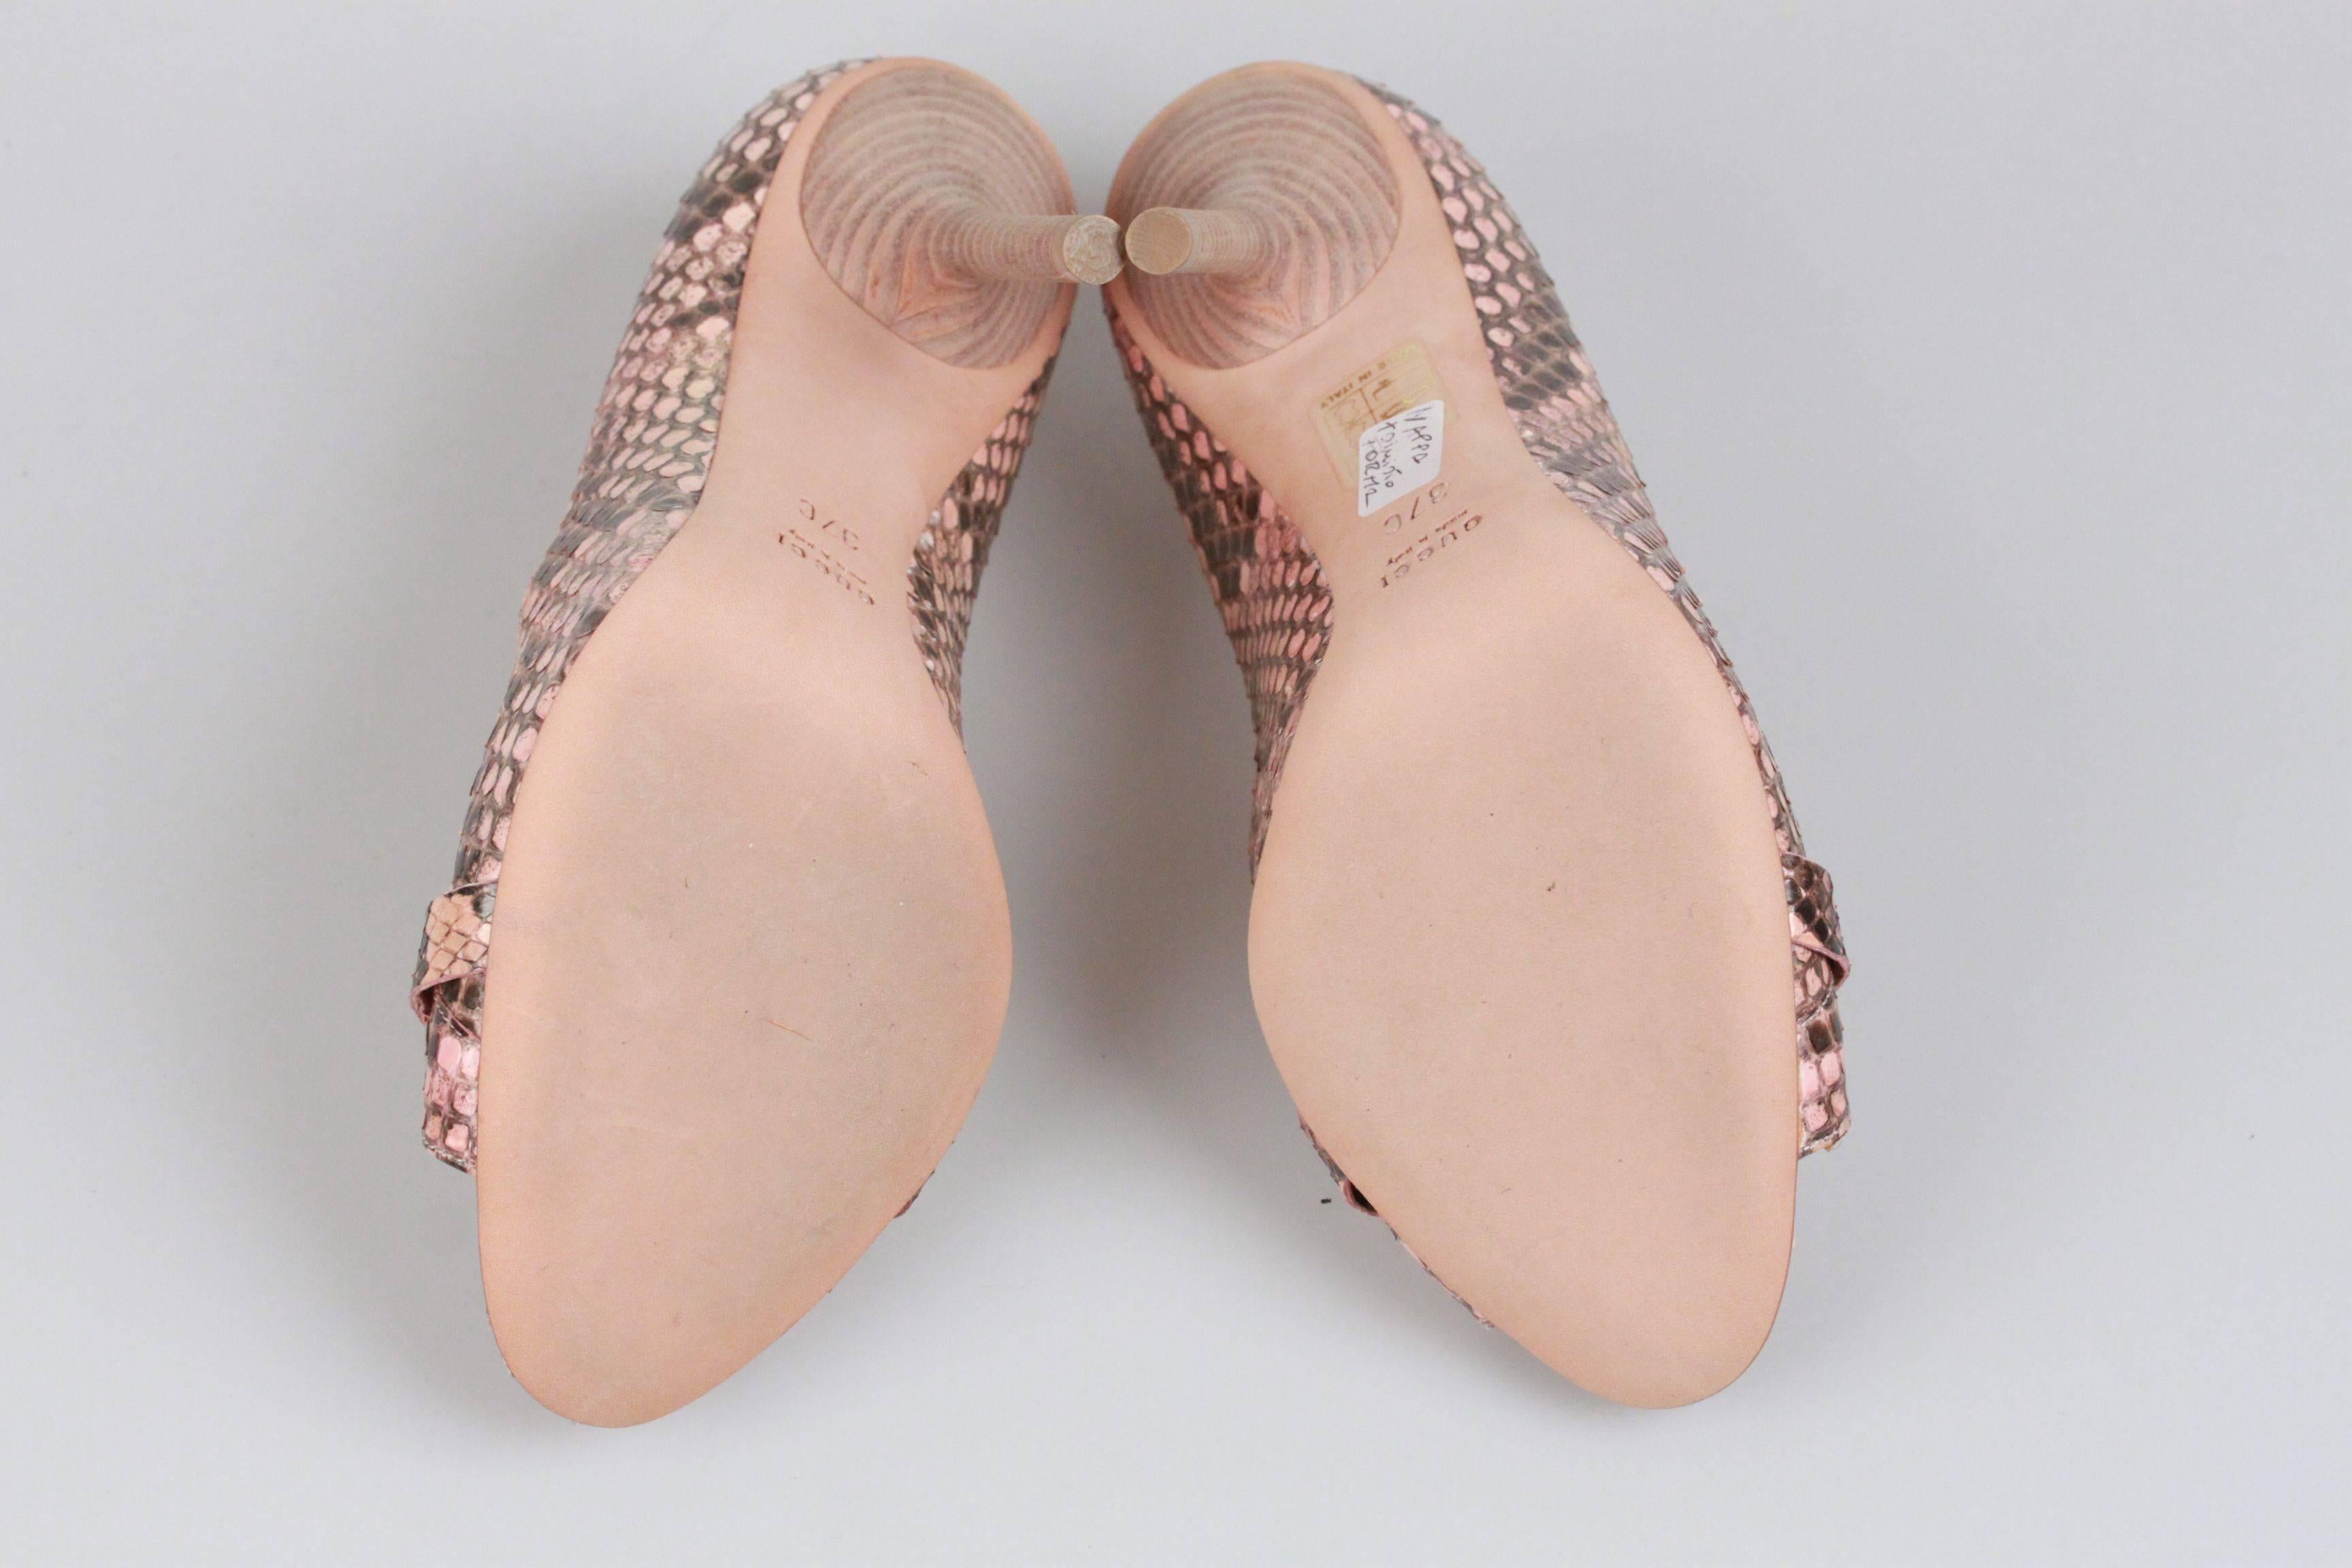 gucci pink heels